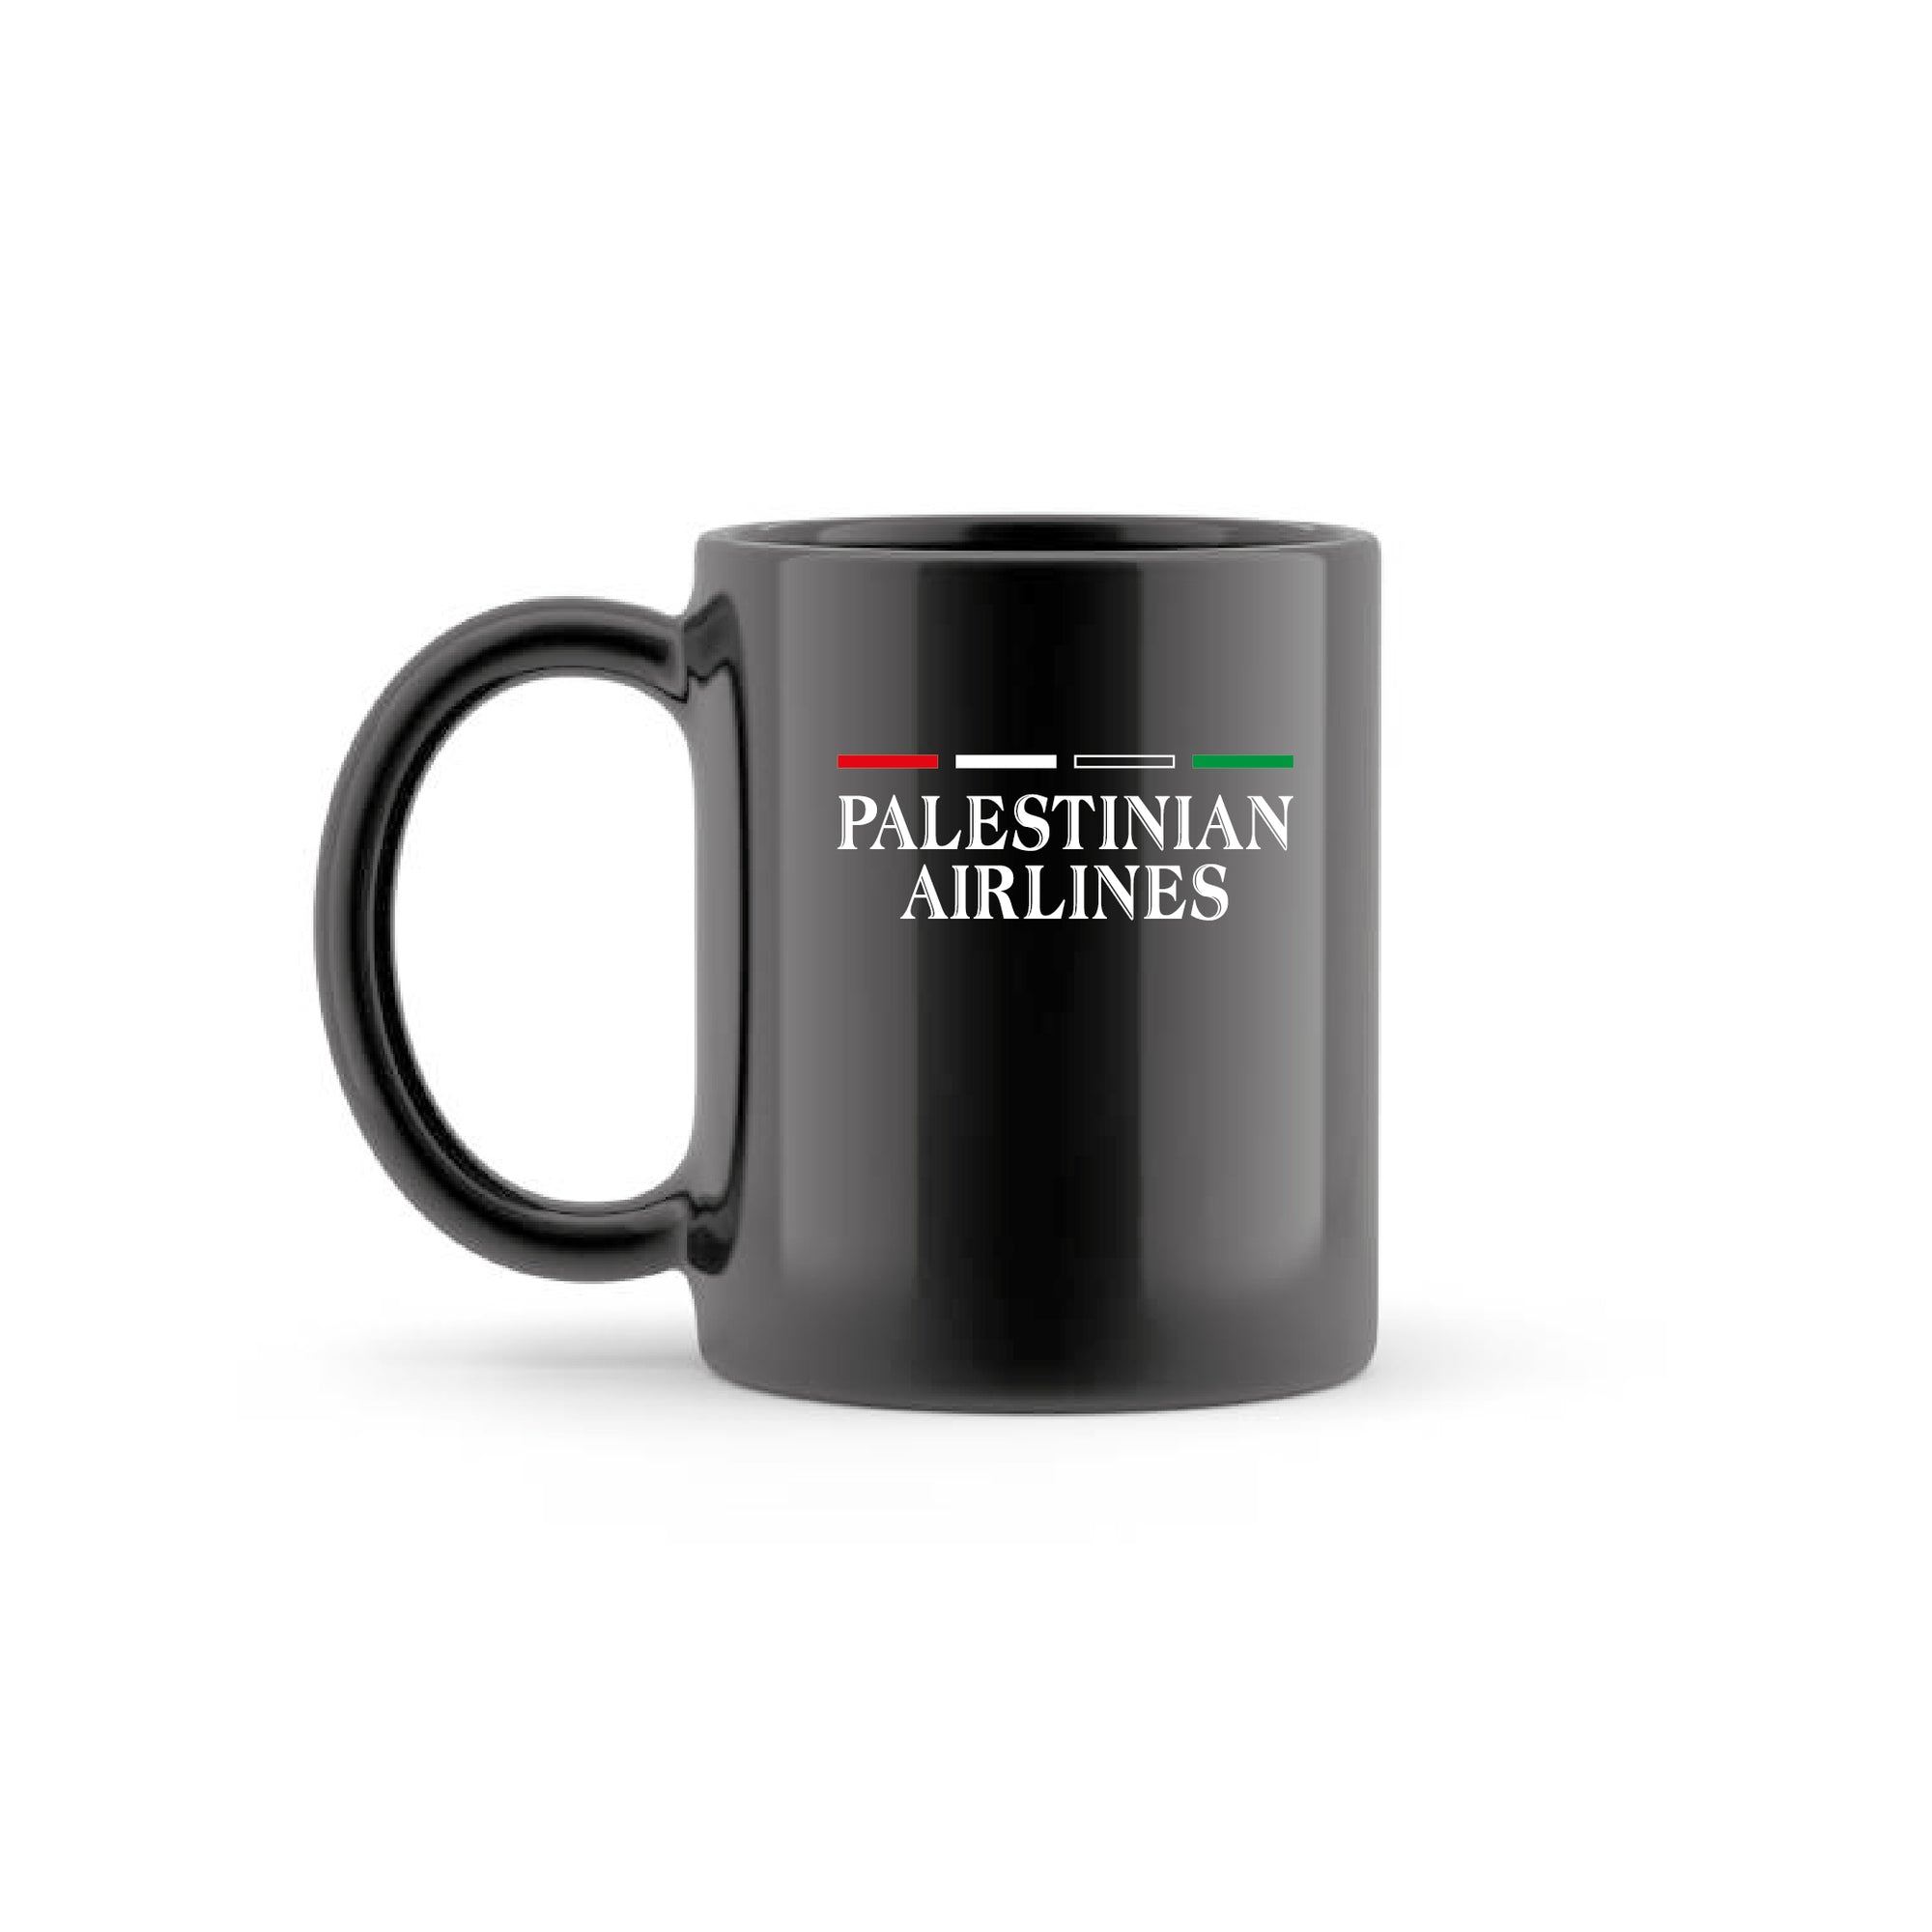 Mug - Palestinian airlines